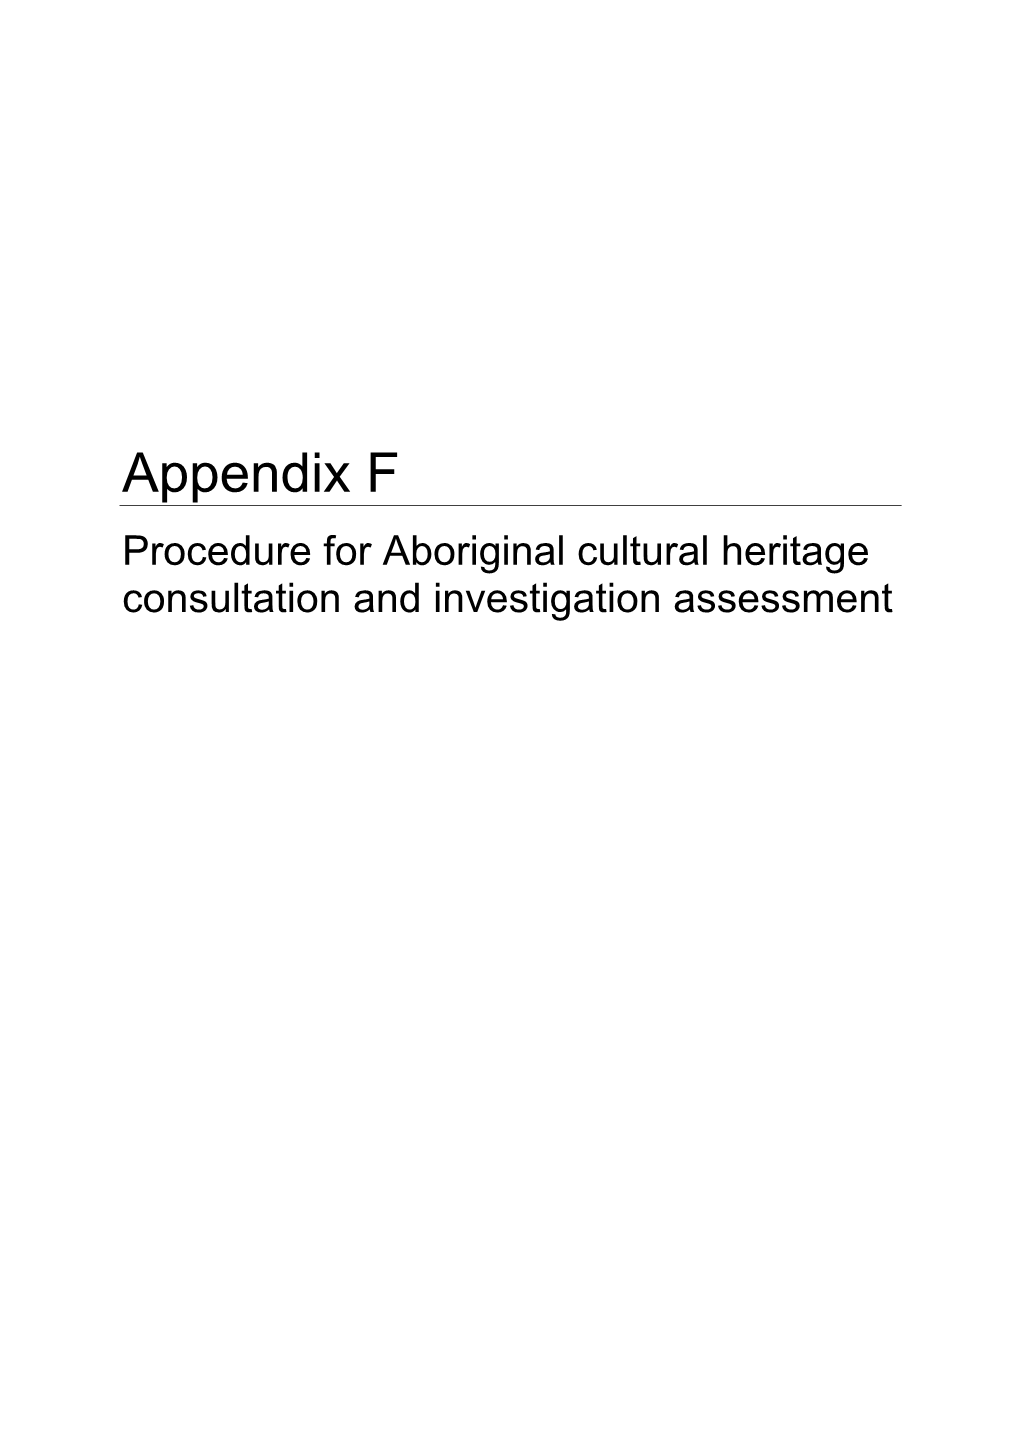 Appendix F Procedure for Aboriginal Cultural Heritage Consultation and Investigation Assessment